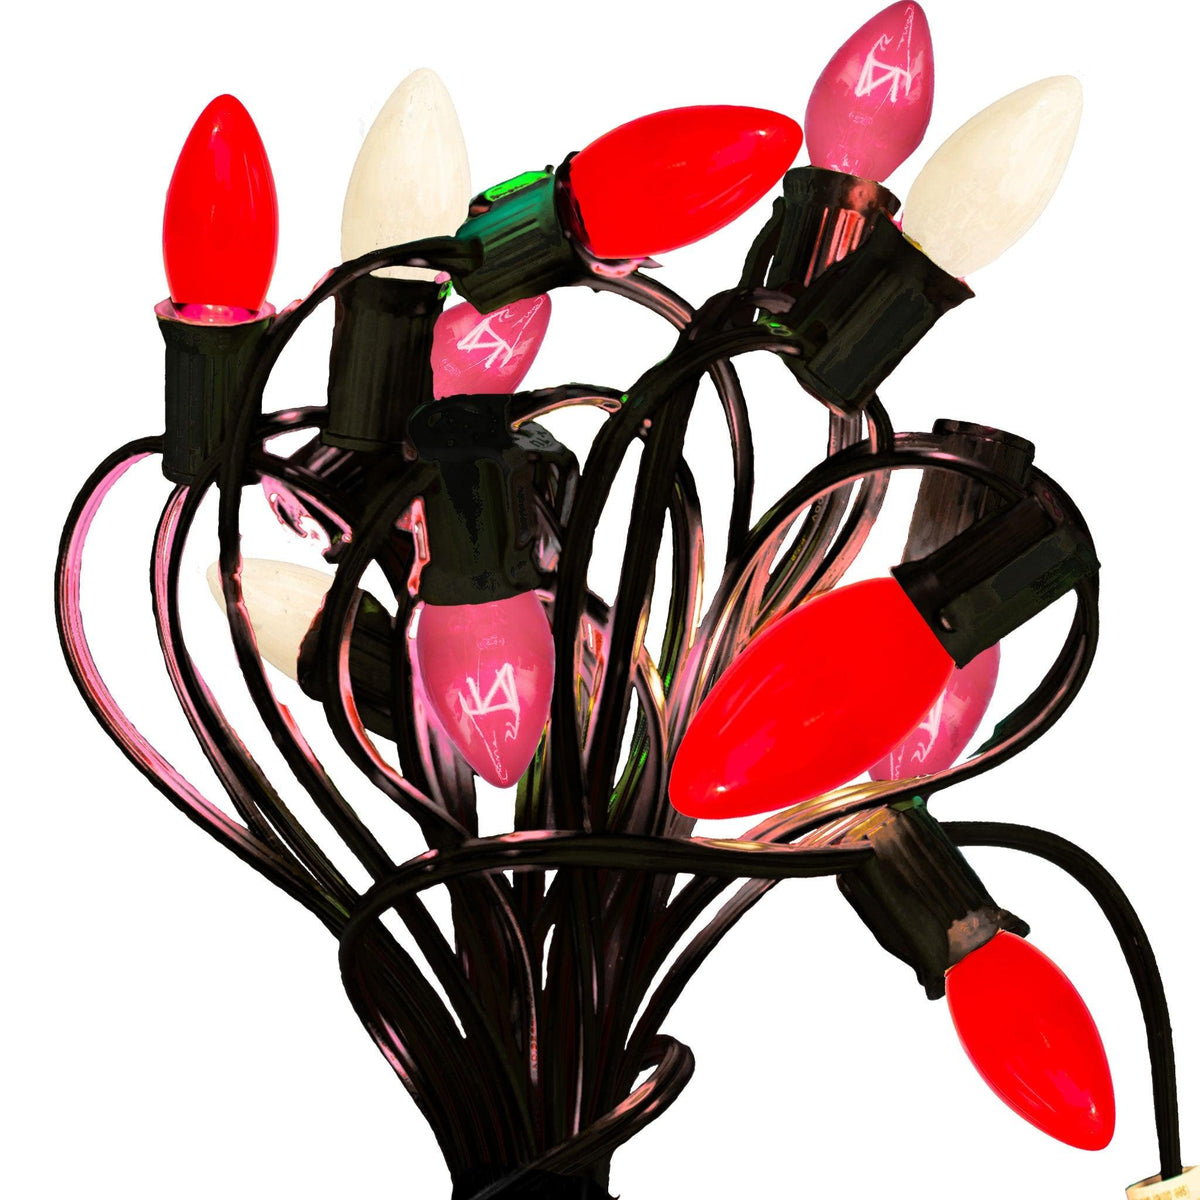 Buy a brand new set of Lee Display's C7/C9 Candelabra Style Valentine's Day Christmas Light Sets on sale at leedisplay.com